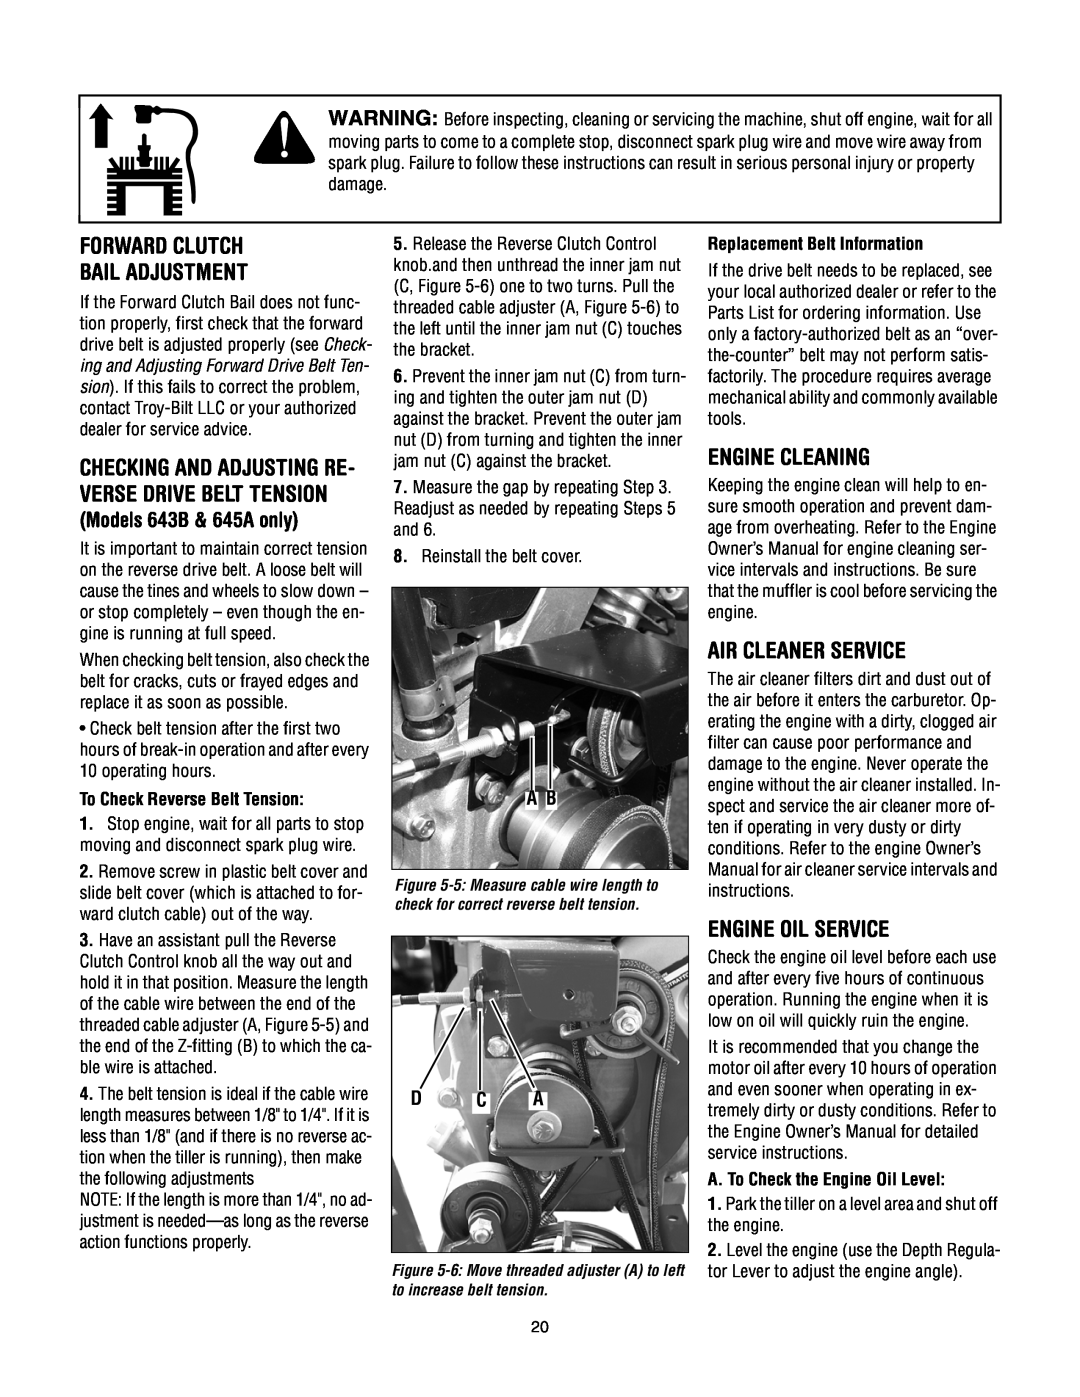 Troy-Bilt 645A Super Bronco manual Forward Clutch Bail Adjustment, Engine Cleaning, Air Cleaner Service, Engine Oil Service 